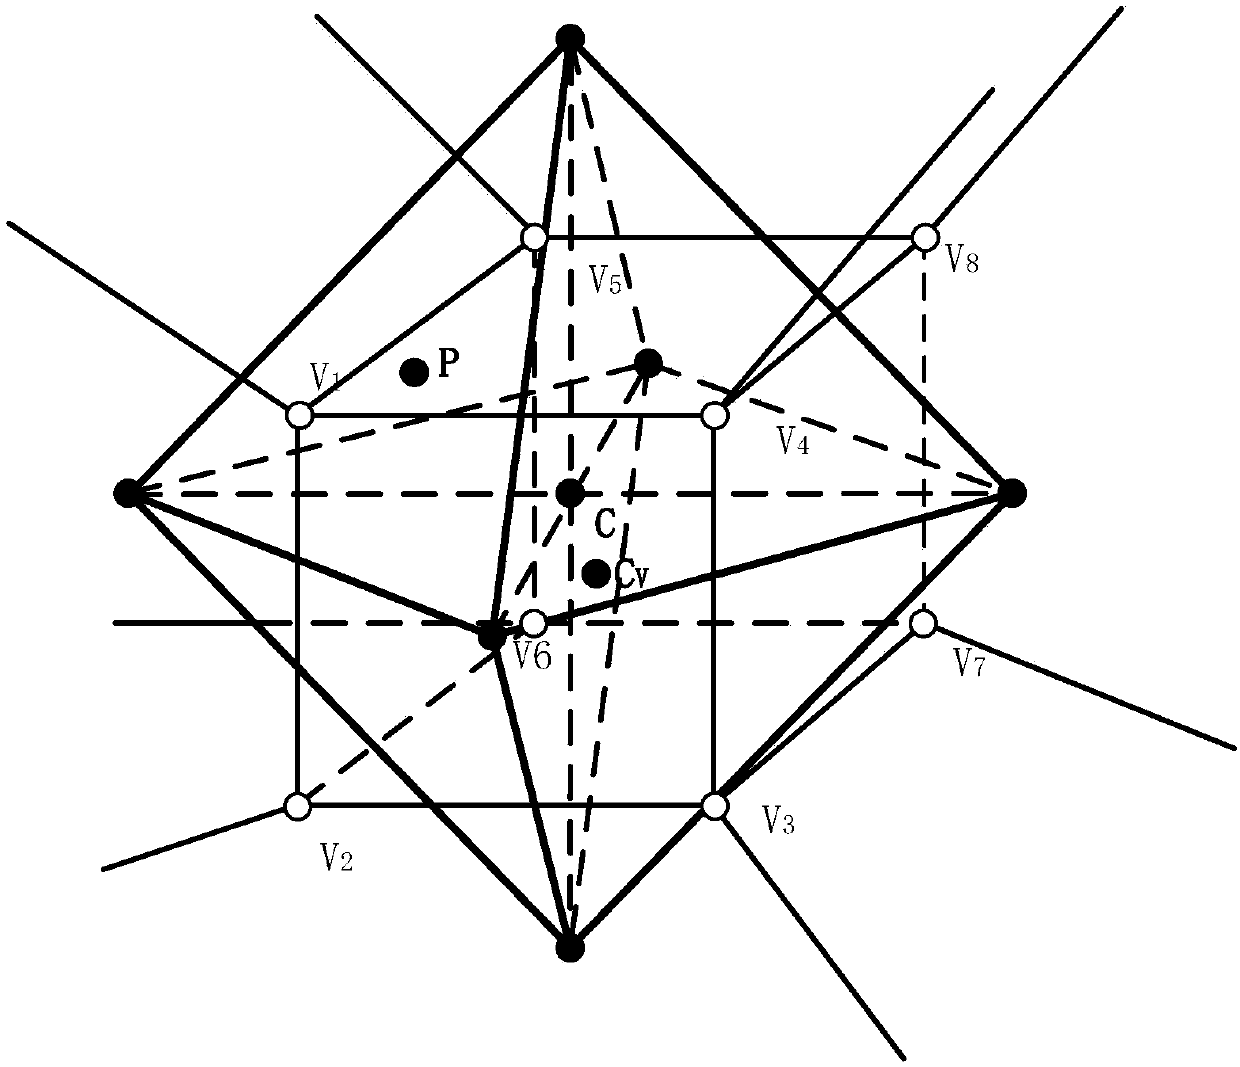 Three-dimensional directed heterogeneous mobile sensor network self-deployment method based on Voronoi diagram